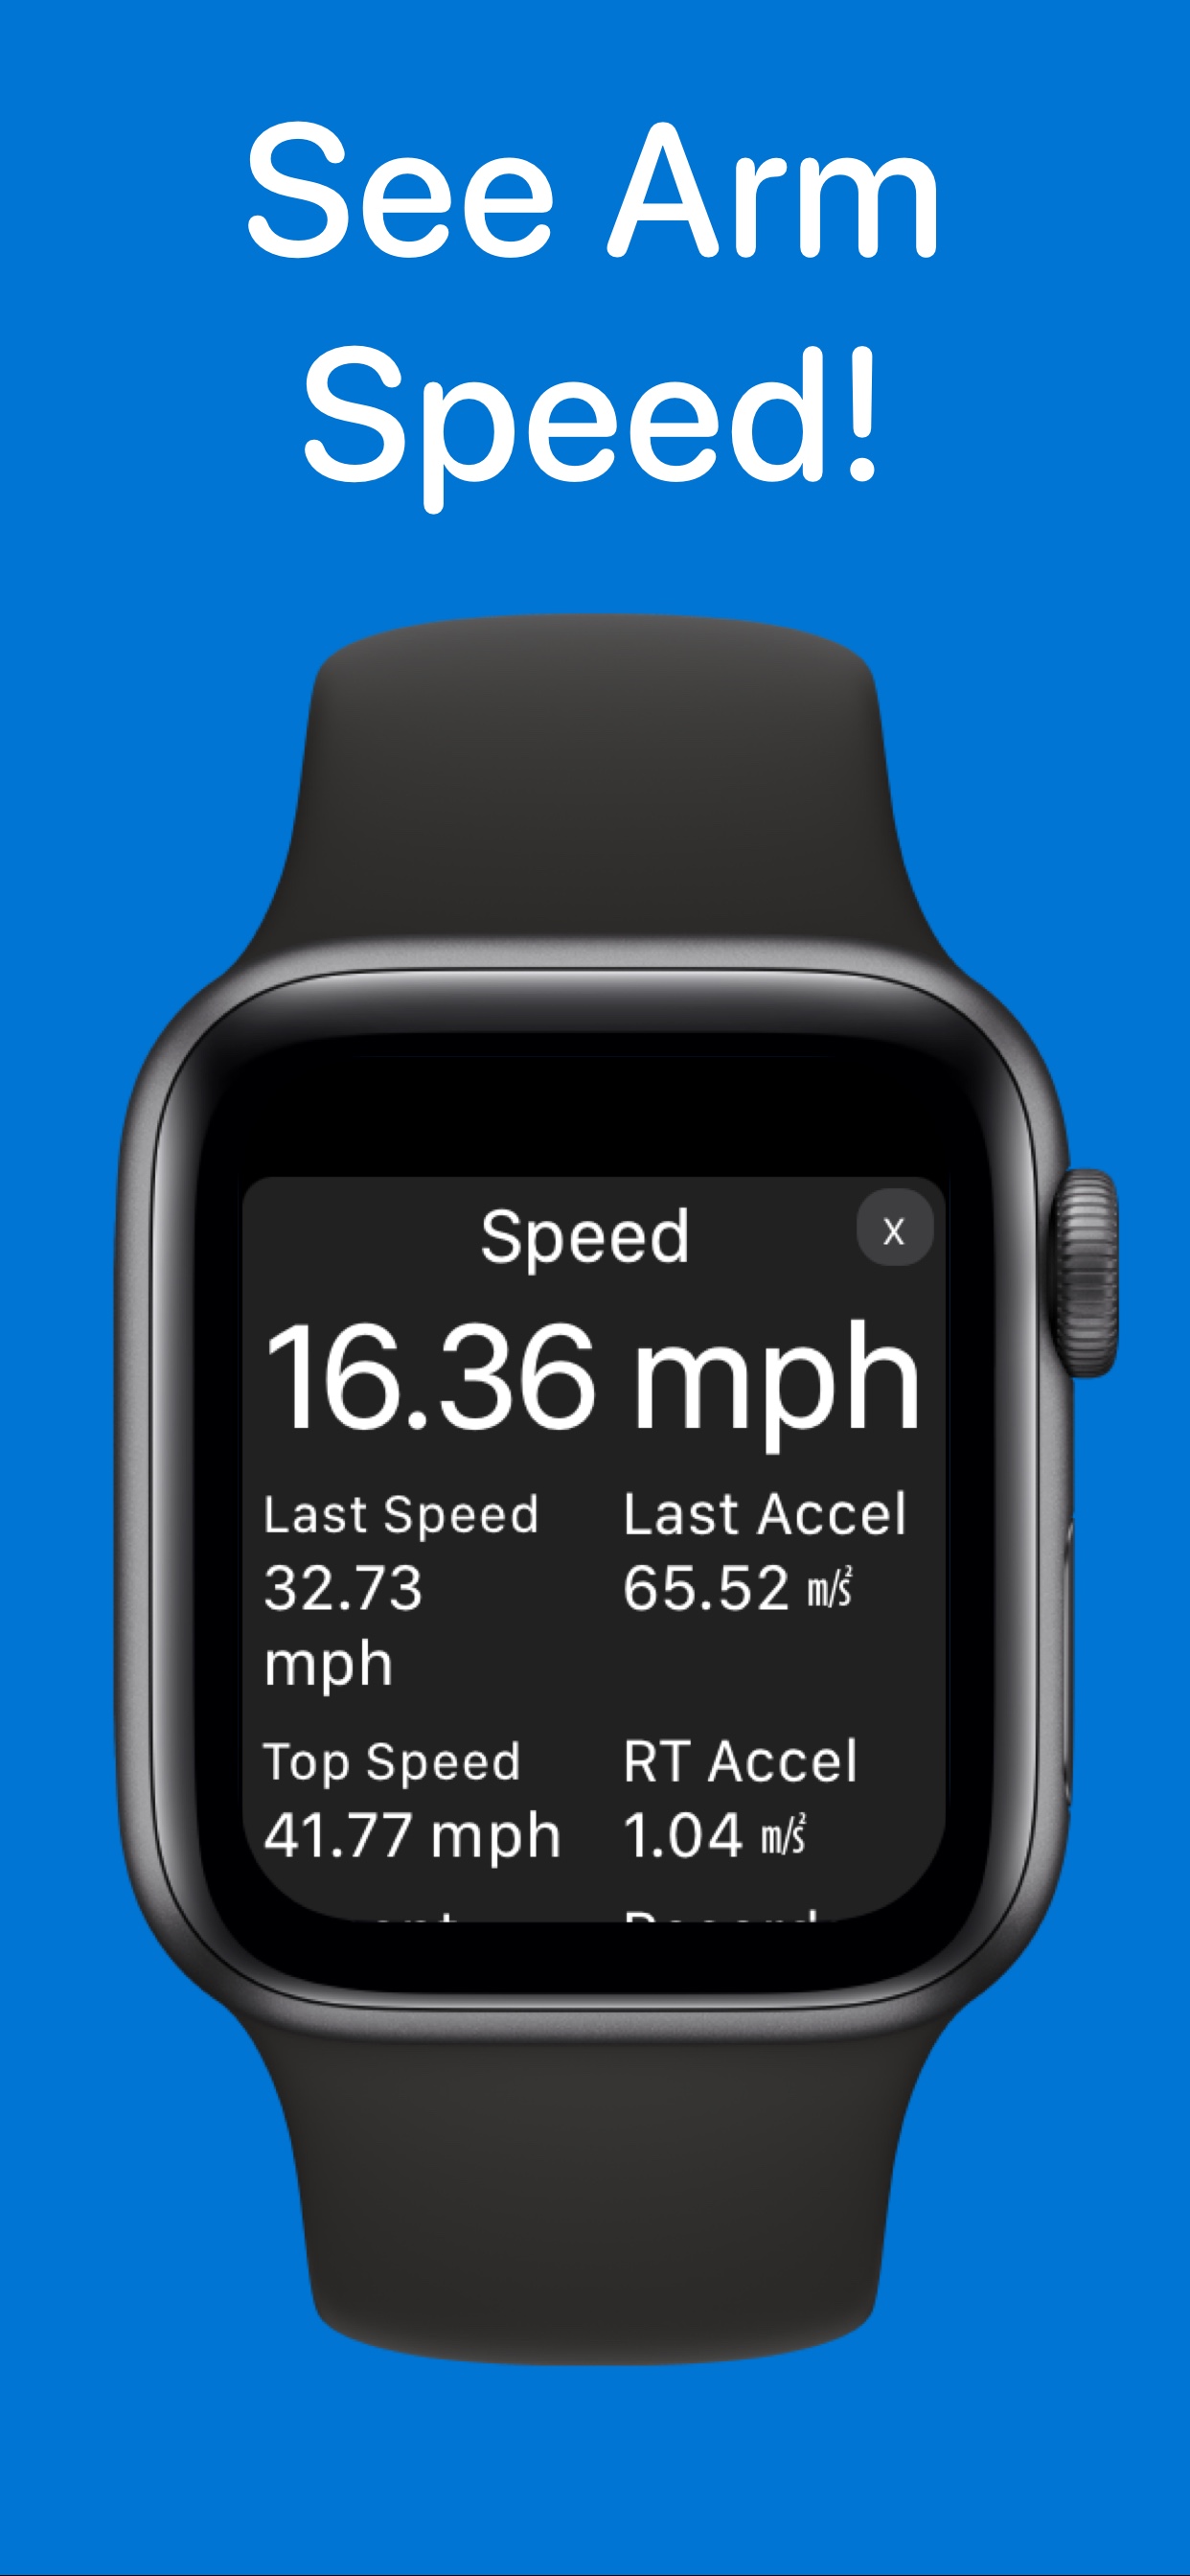 Arm Speed Analyzer tracks movement speed using your Apple Watch